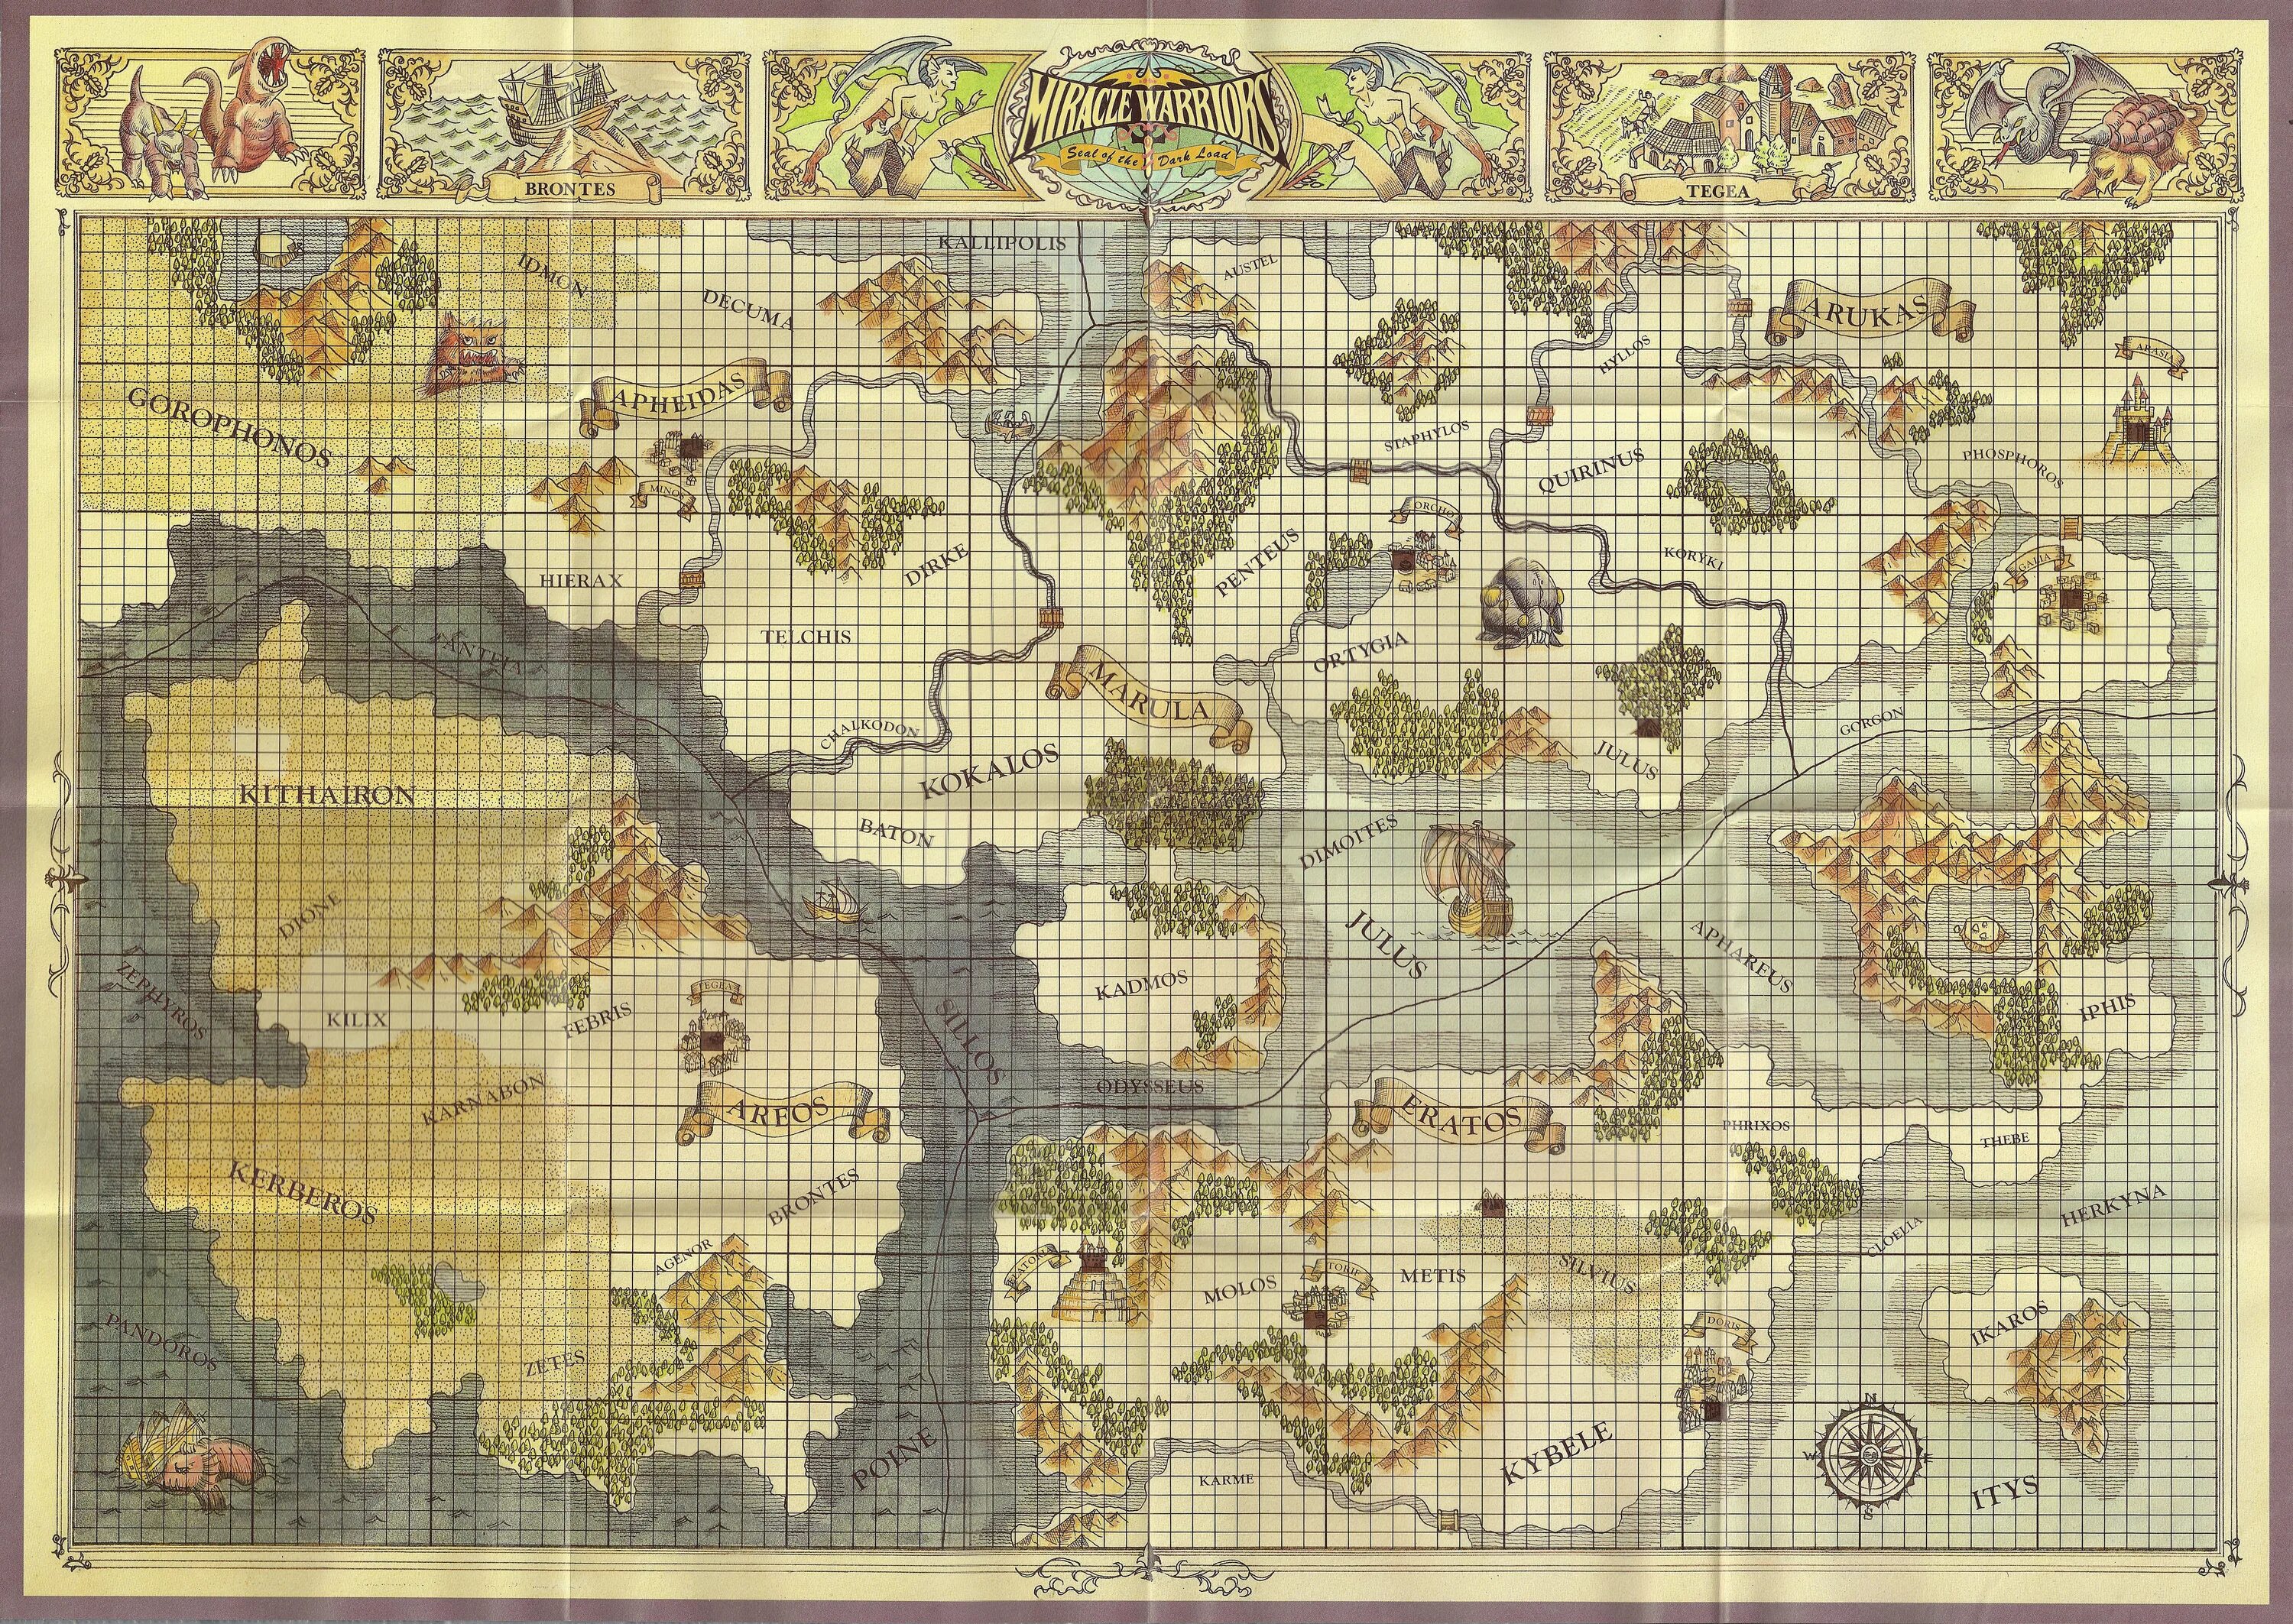 Warrior maps. The Warriors game Map. WINDCLAN Warriors Map. Бронте карта игра.